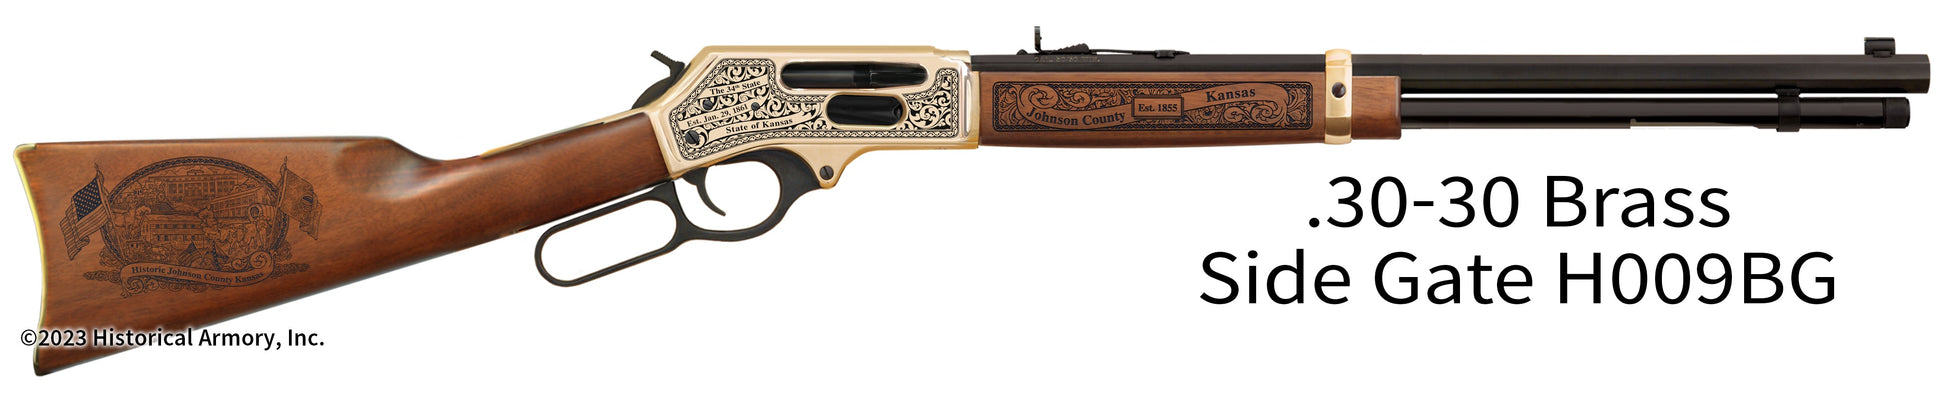 Johnson County Kansas Engraved Henry .30-30 Brass Side Gate Rifle